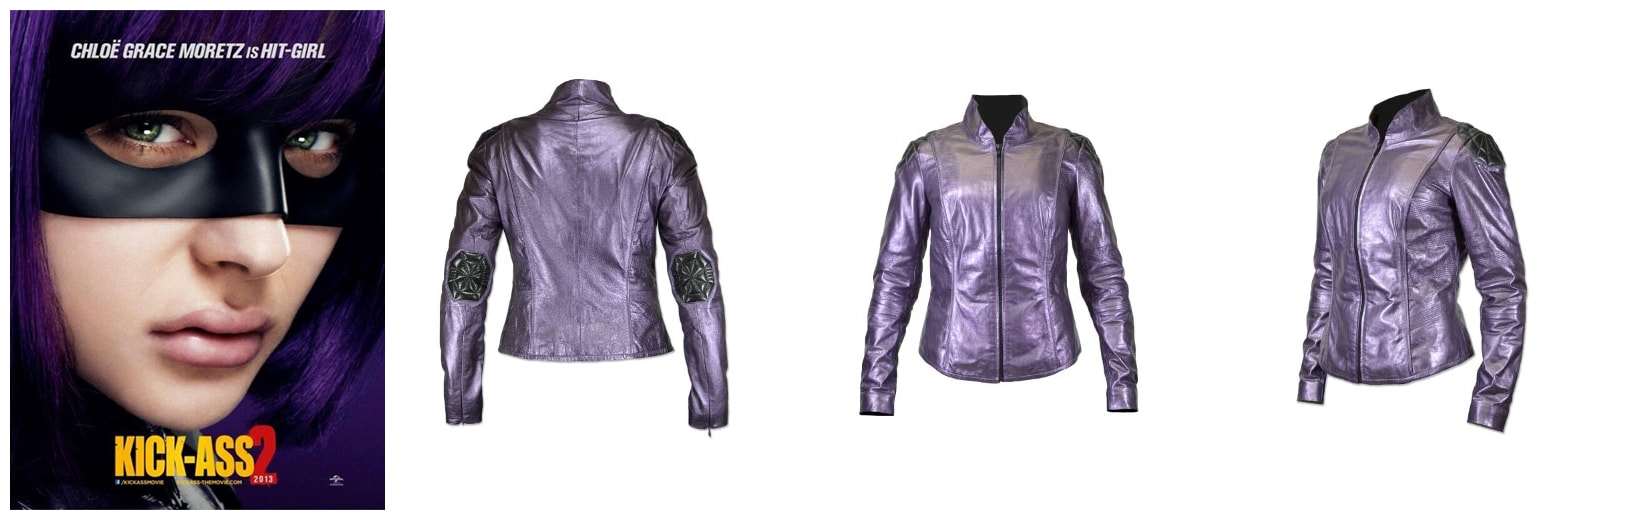 Kick Ass 2: Hit Girl (Chloe Grace Moretz) Leather Jacket Prop Replica